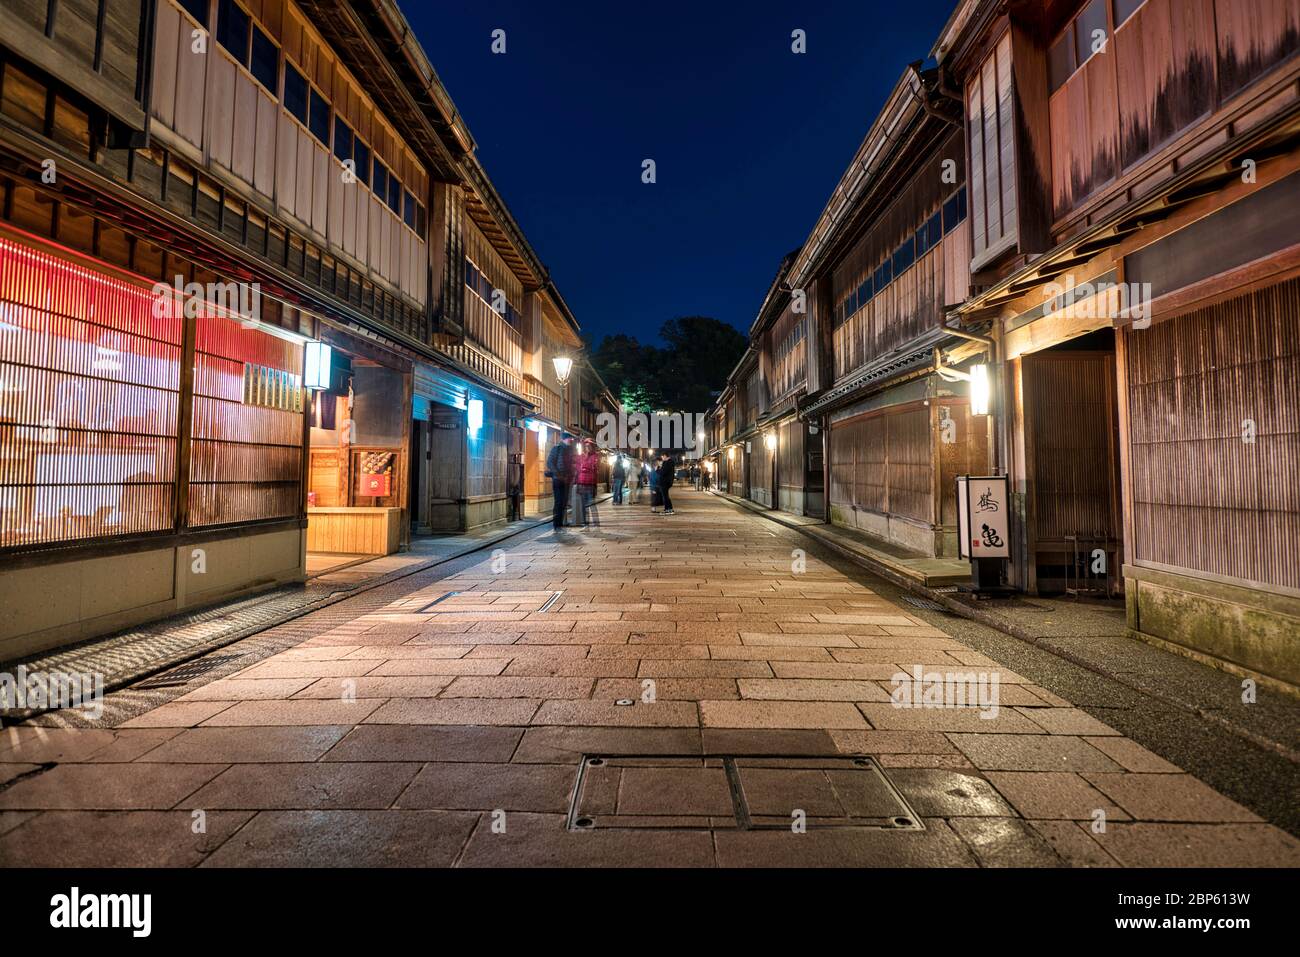 Shadows of people in the night, Higashi Chaya quarter, Kanazawa, Japan. Stock Photo